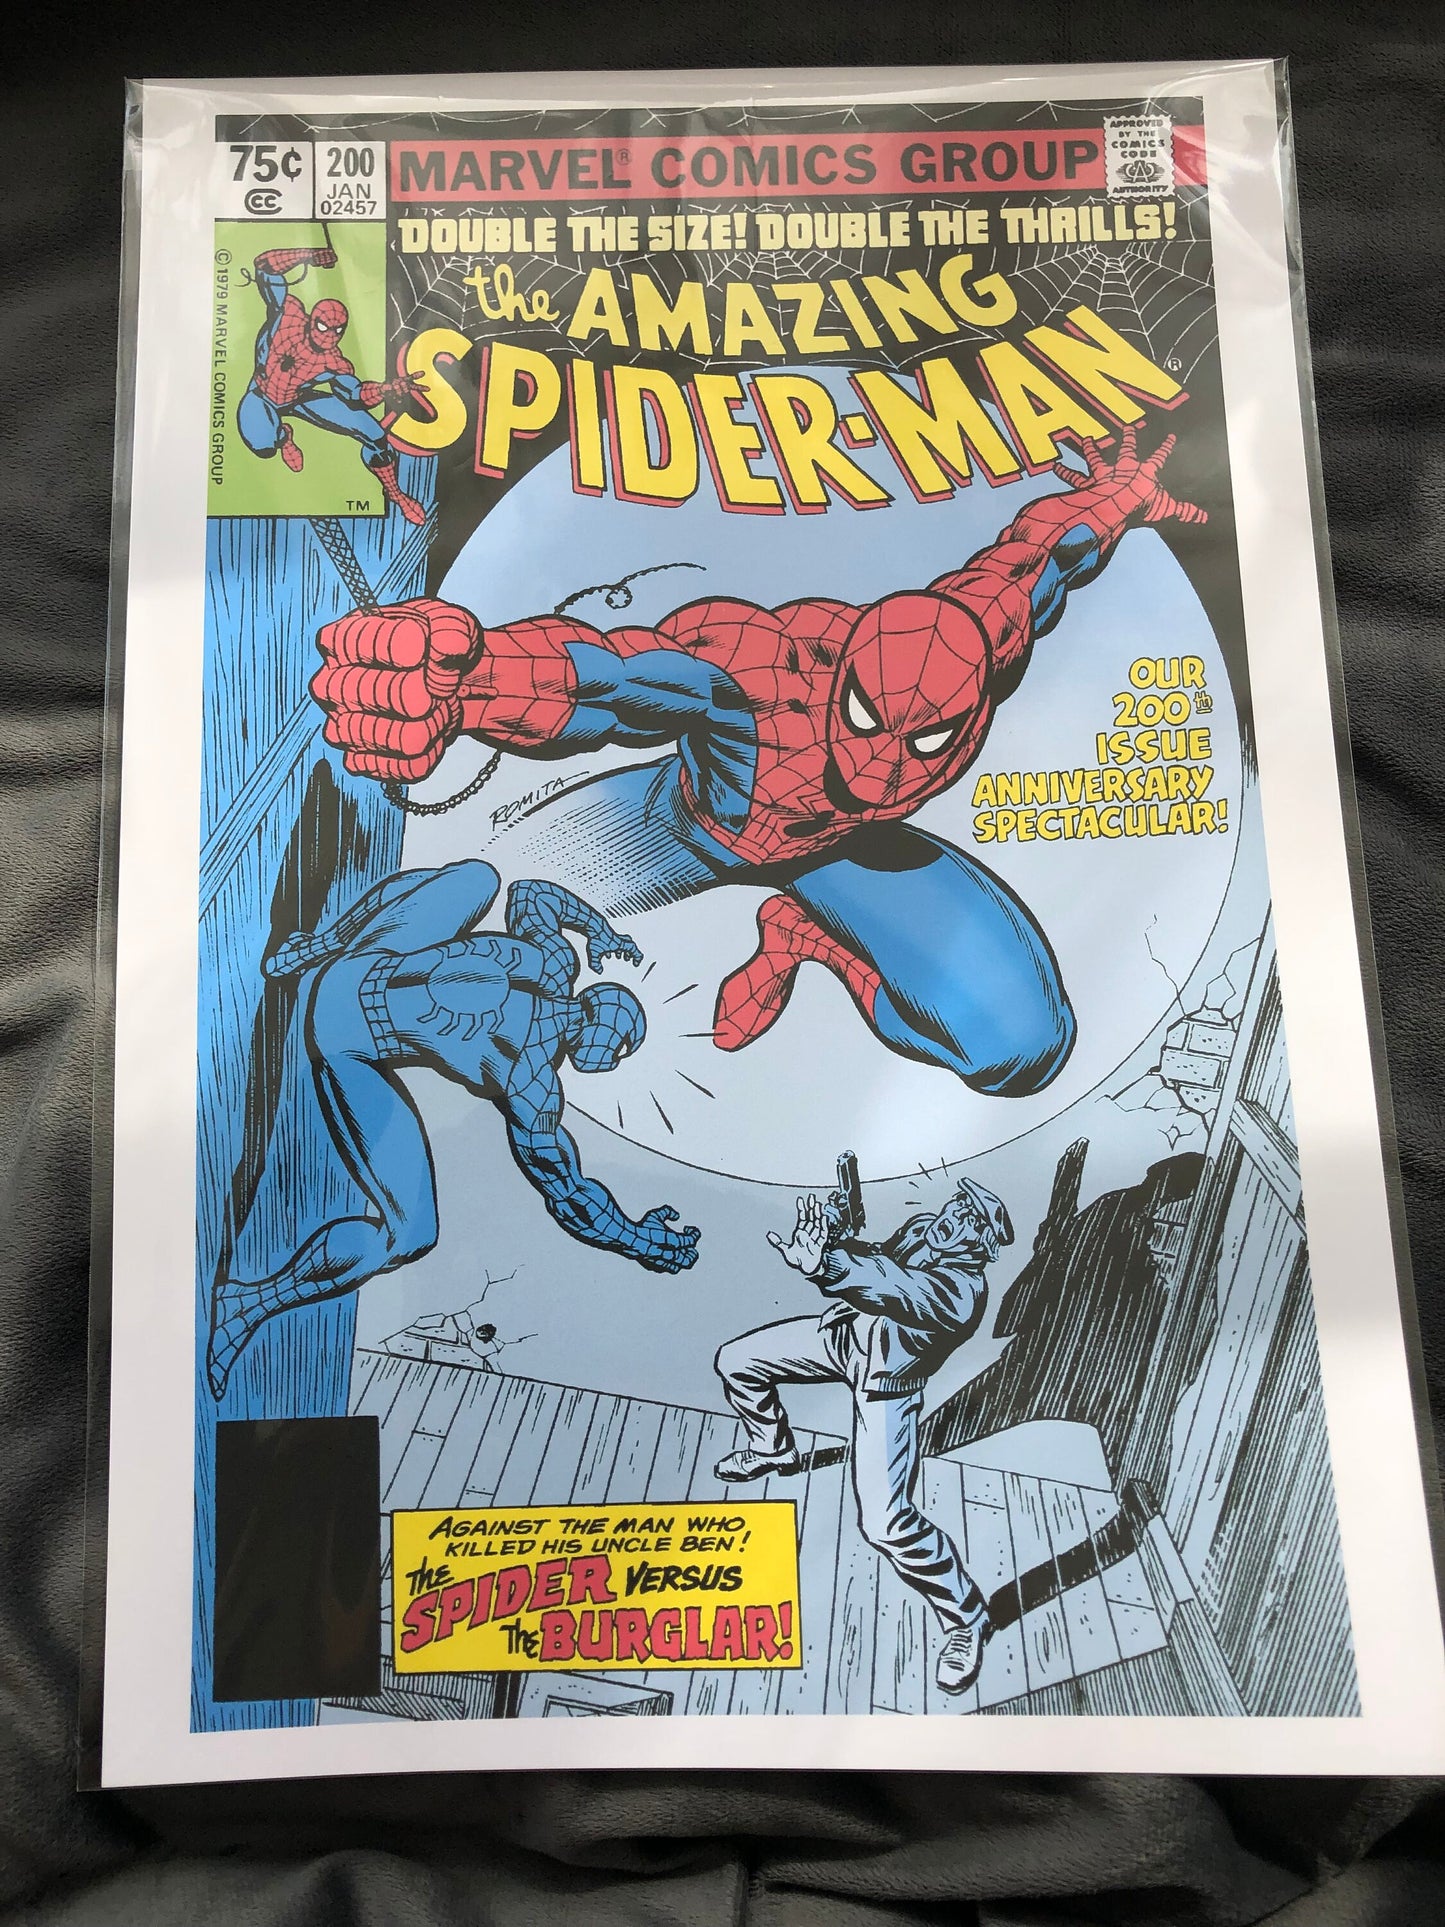 Set of 3, 200th Edition Superhero Comic Cover Prints